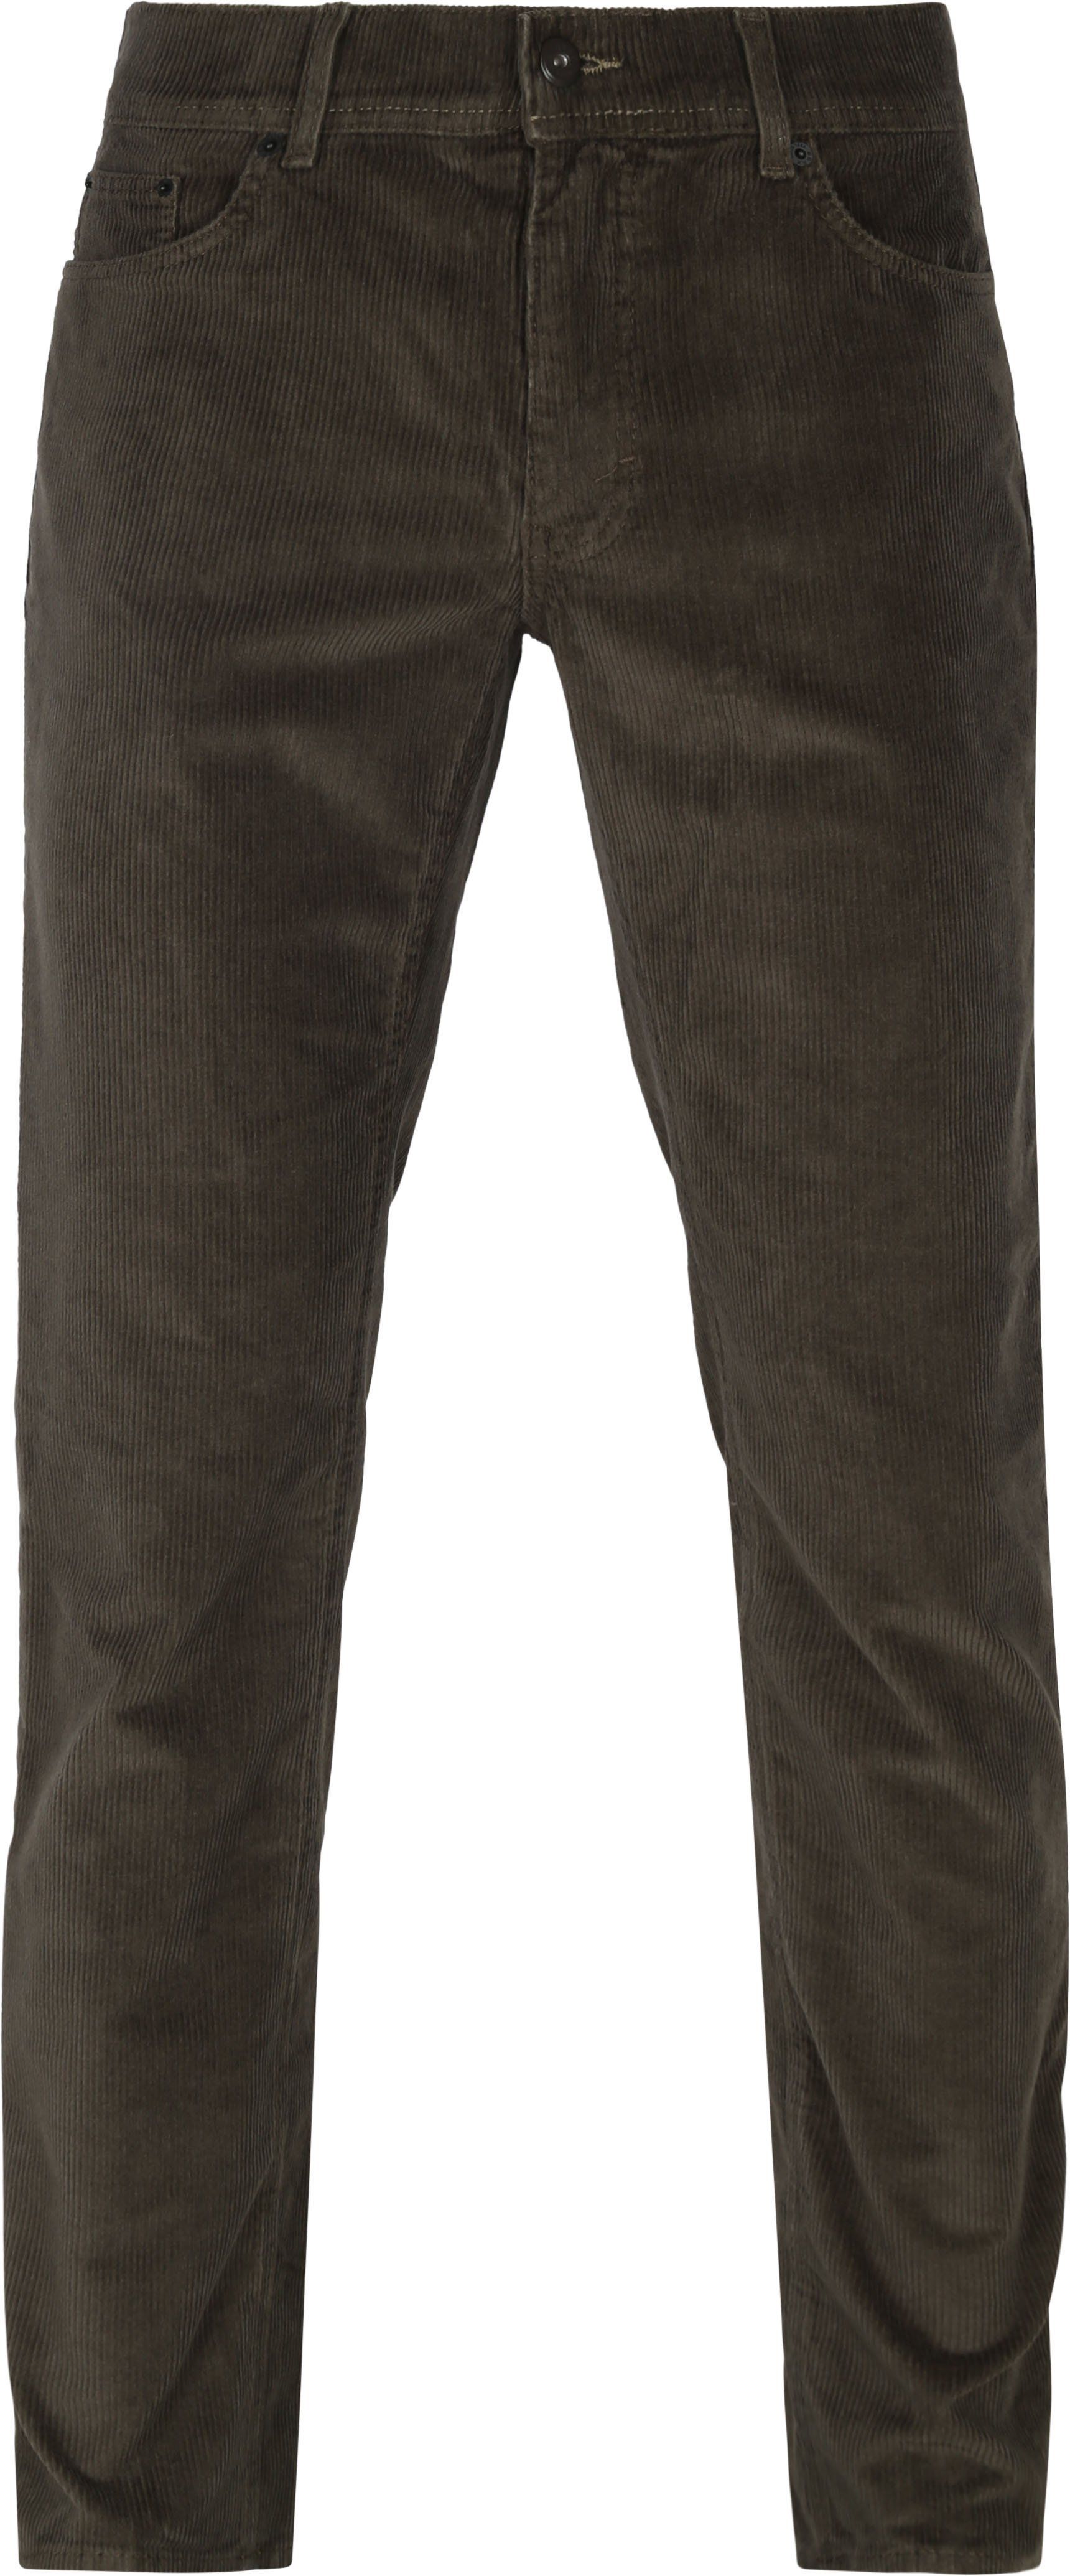 Brax Cooper Trousers Dark Corduroy Dark Green Green size W 40 product